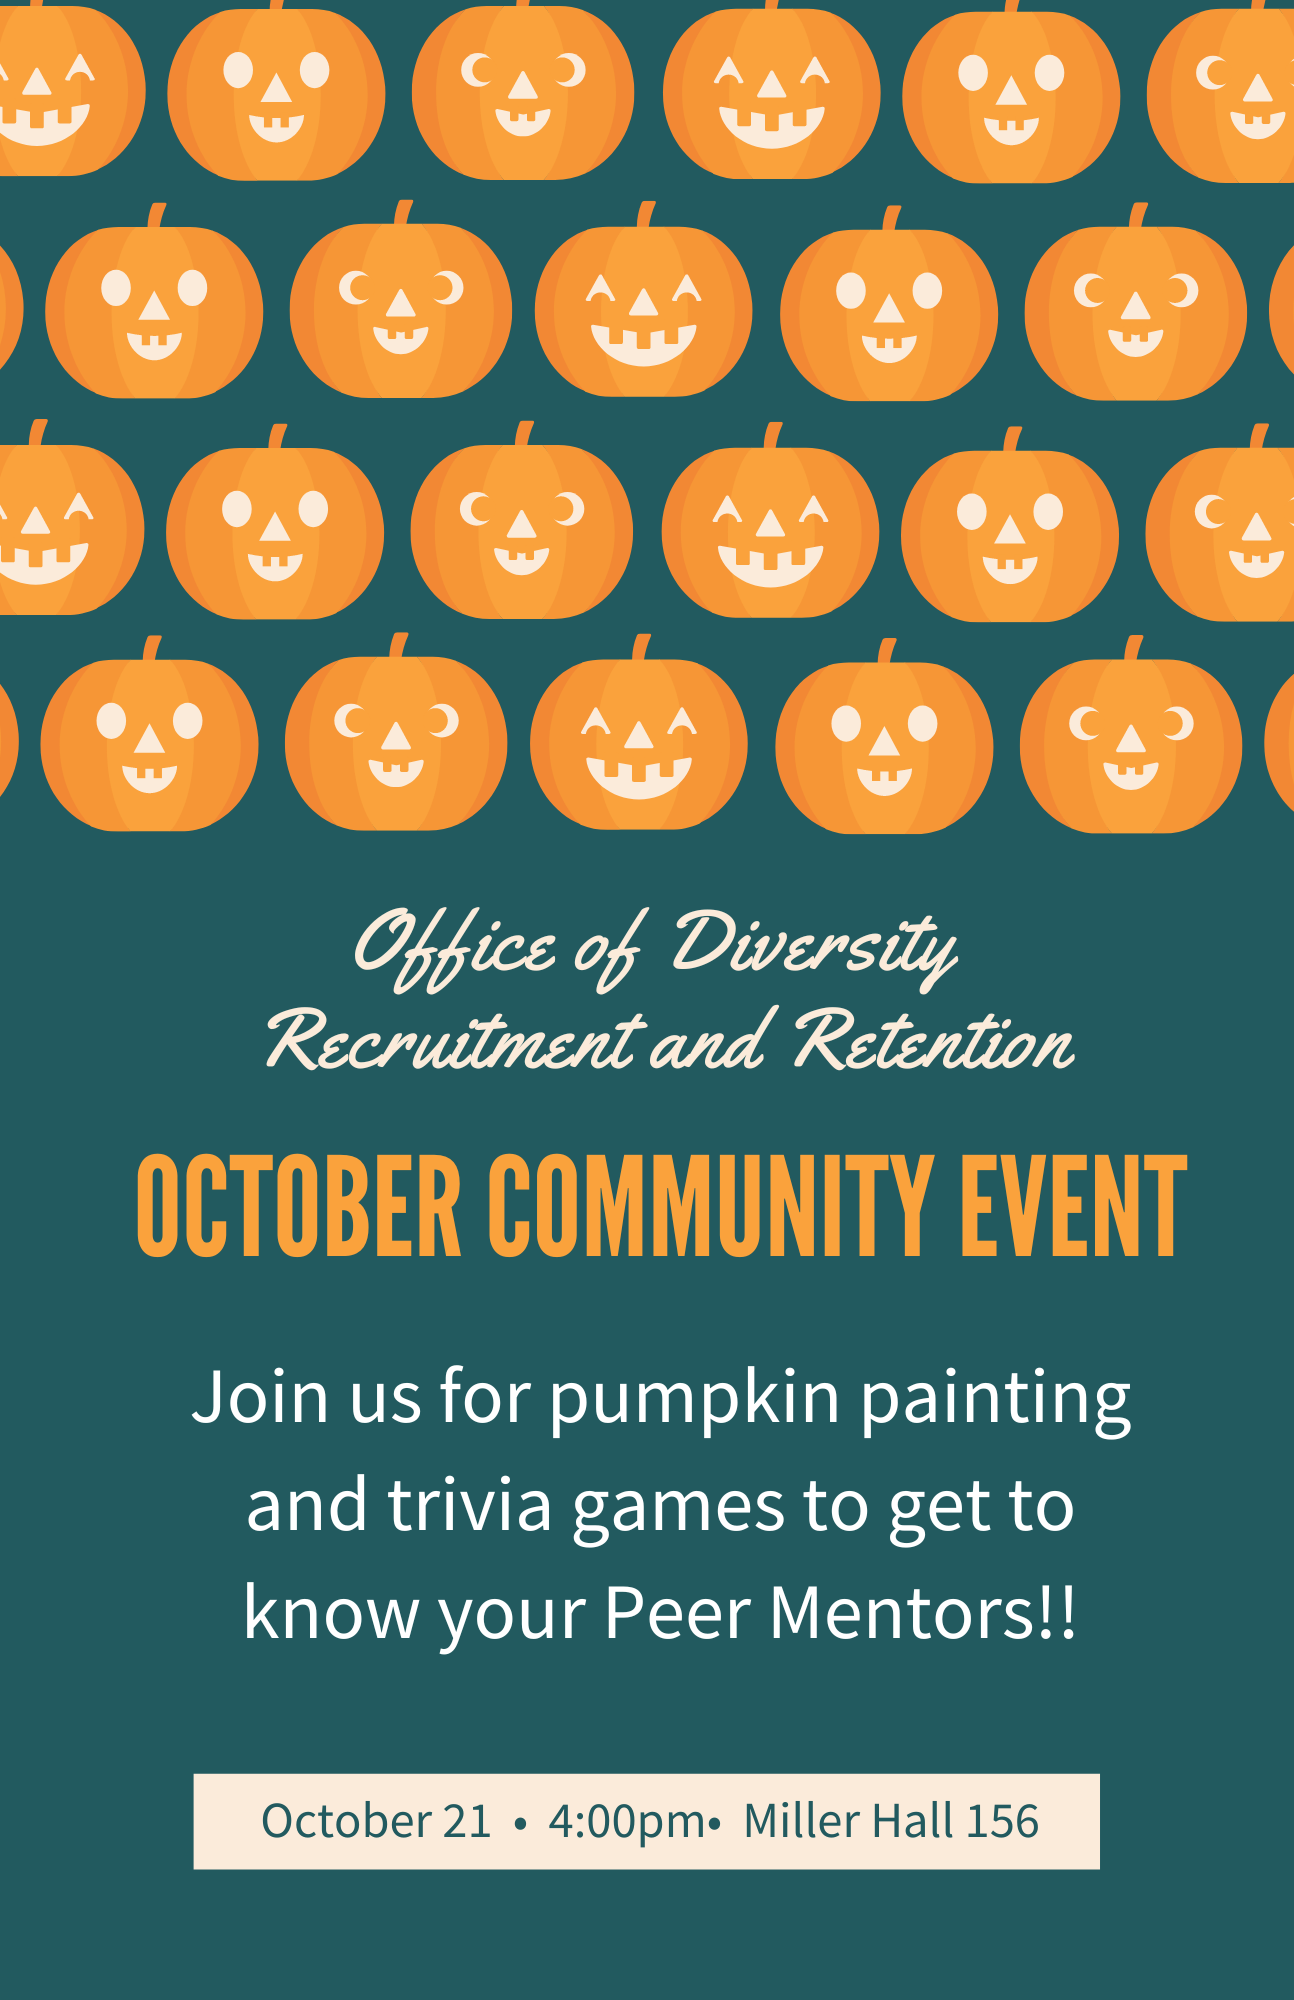 October Community Event Flyer